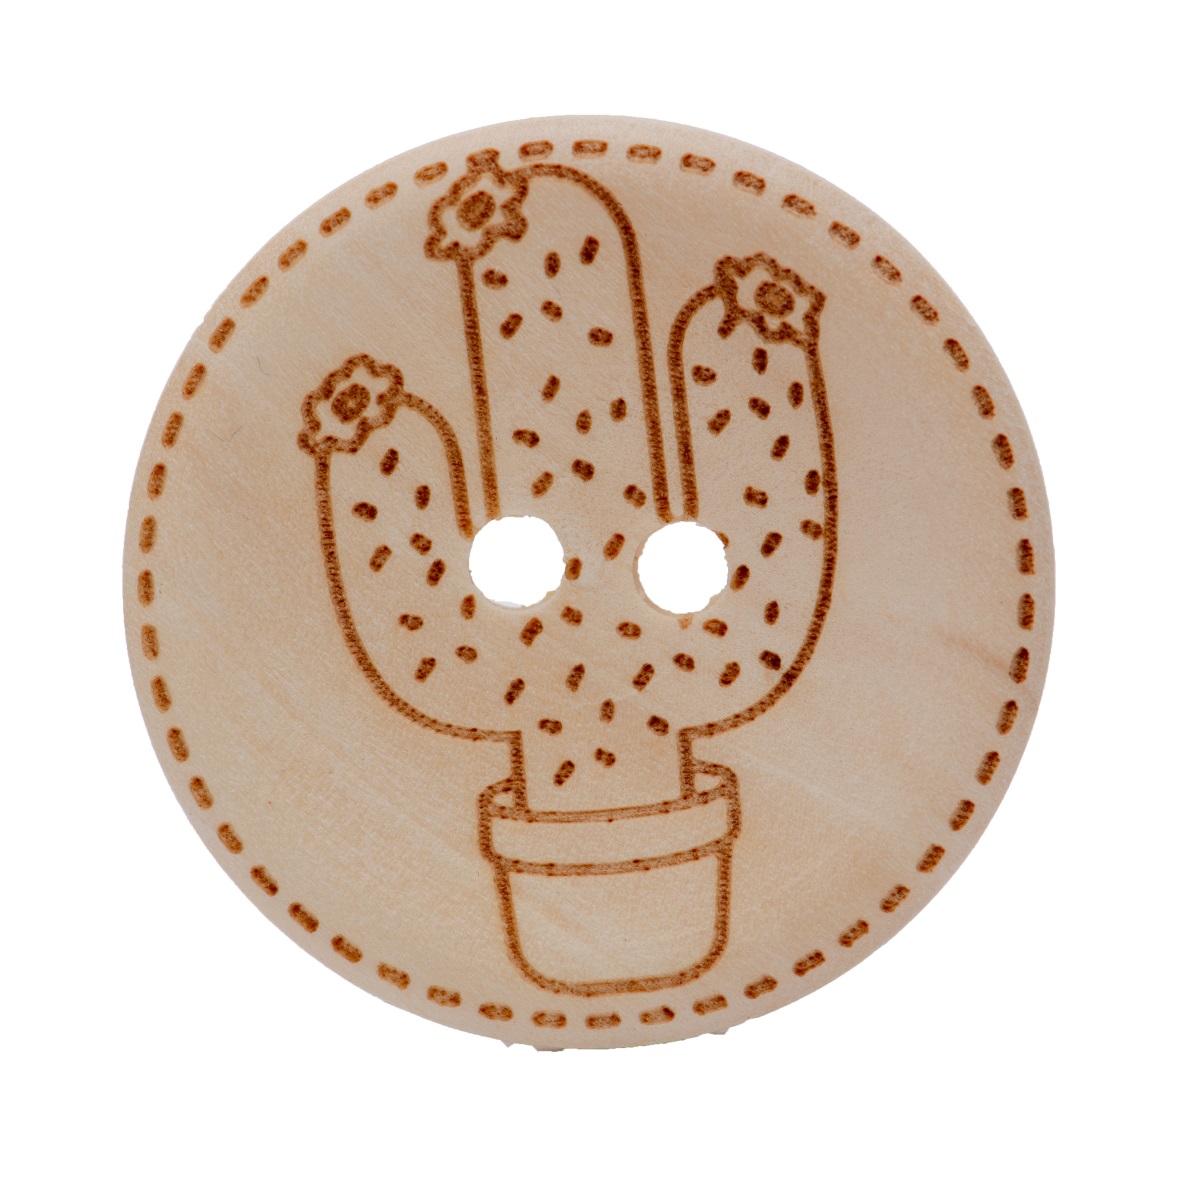 2st Knoop Hout Cactus 30mm